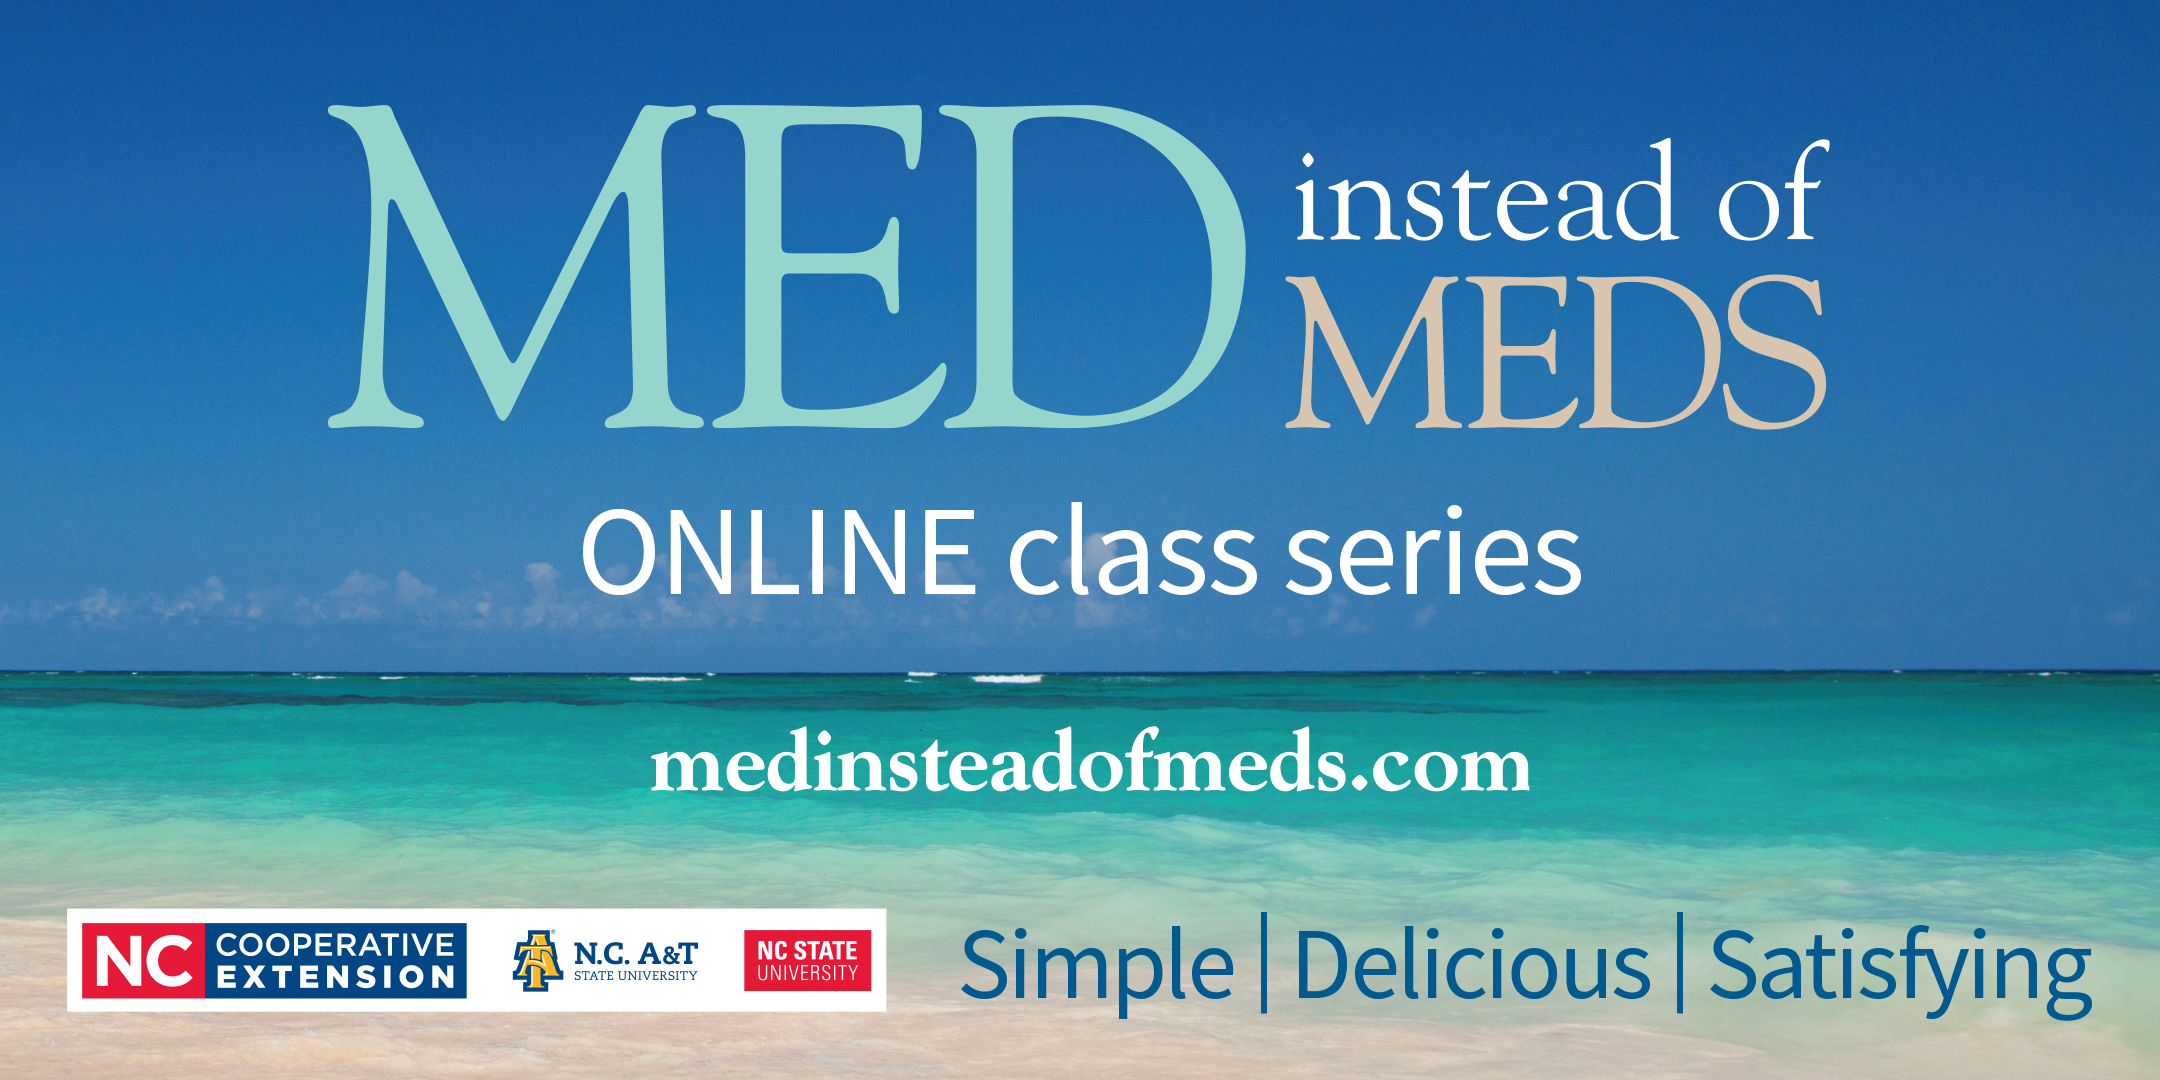 Online Med instead of Meds flyer with beach background